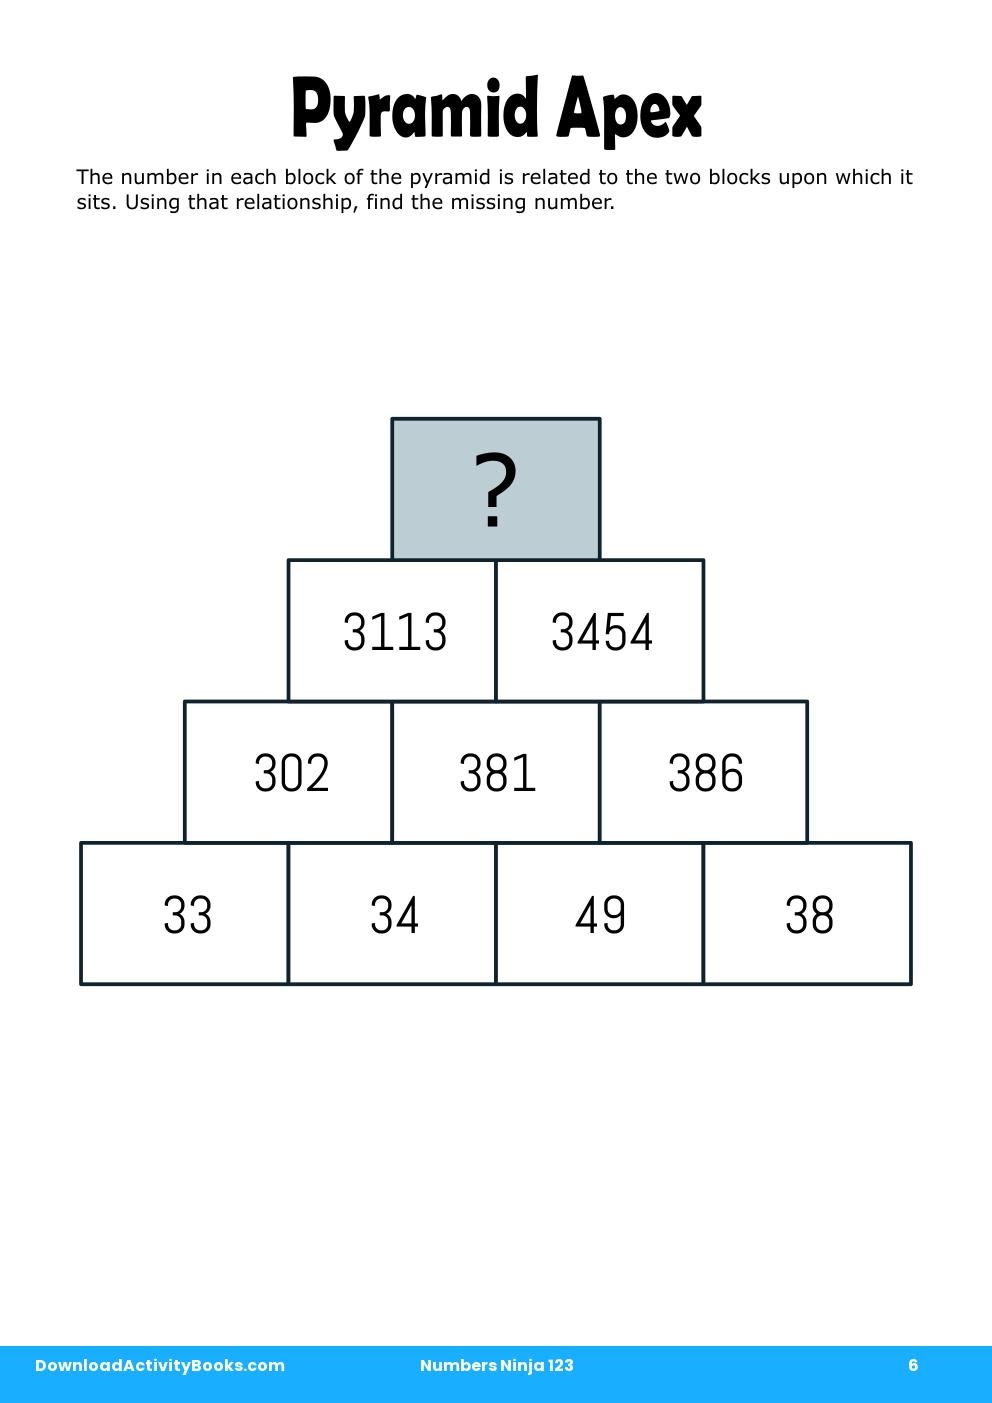 Pyramid Apex in Numbers Ninja 123